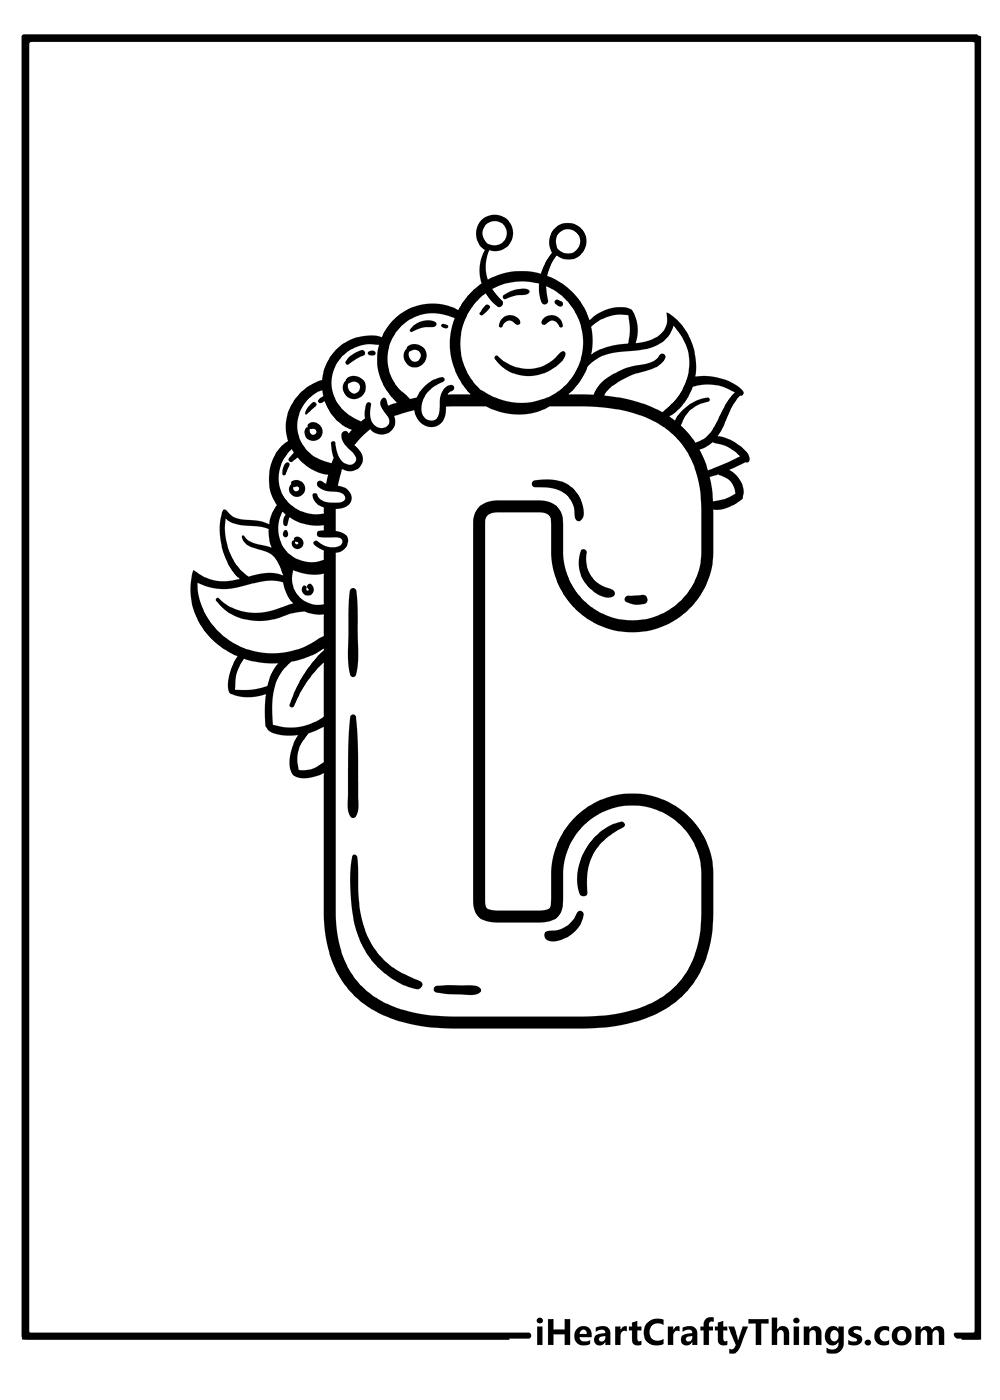 Letter C Coloring Original Sheet for children free download